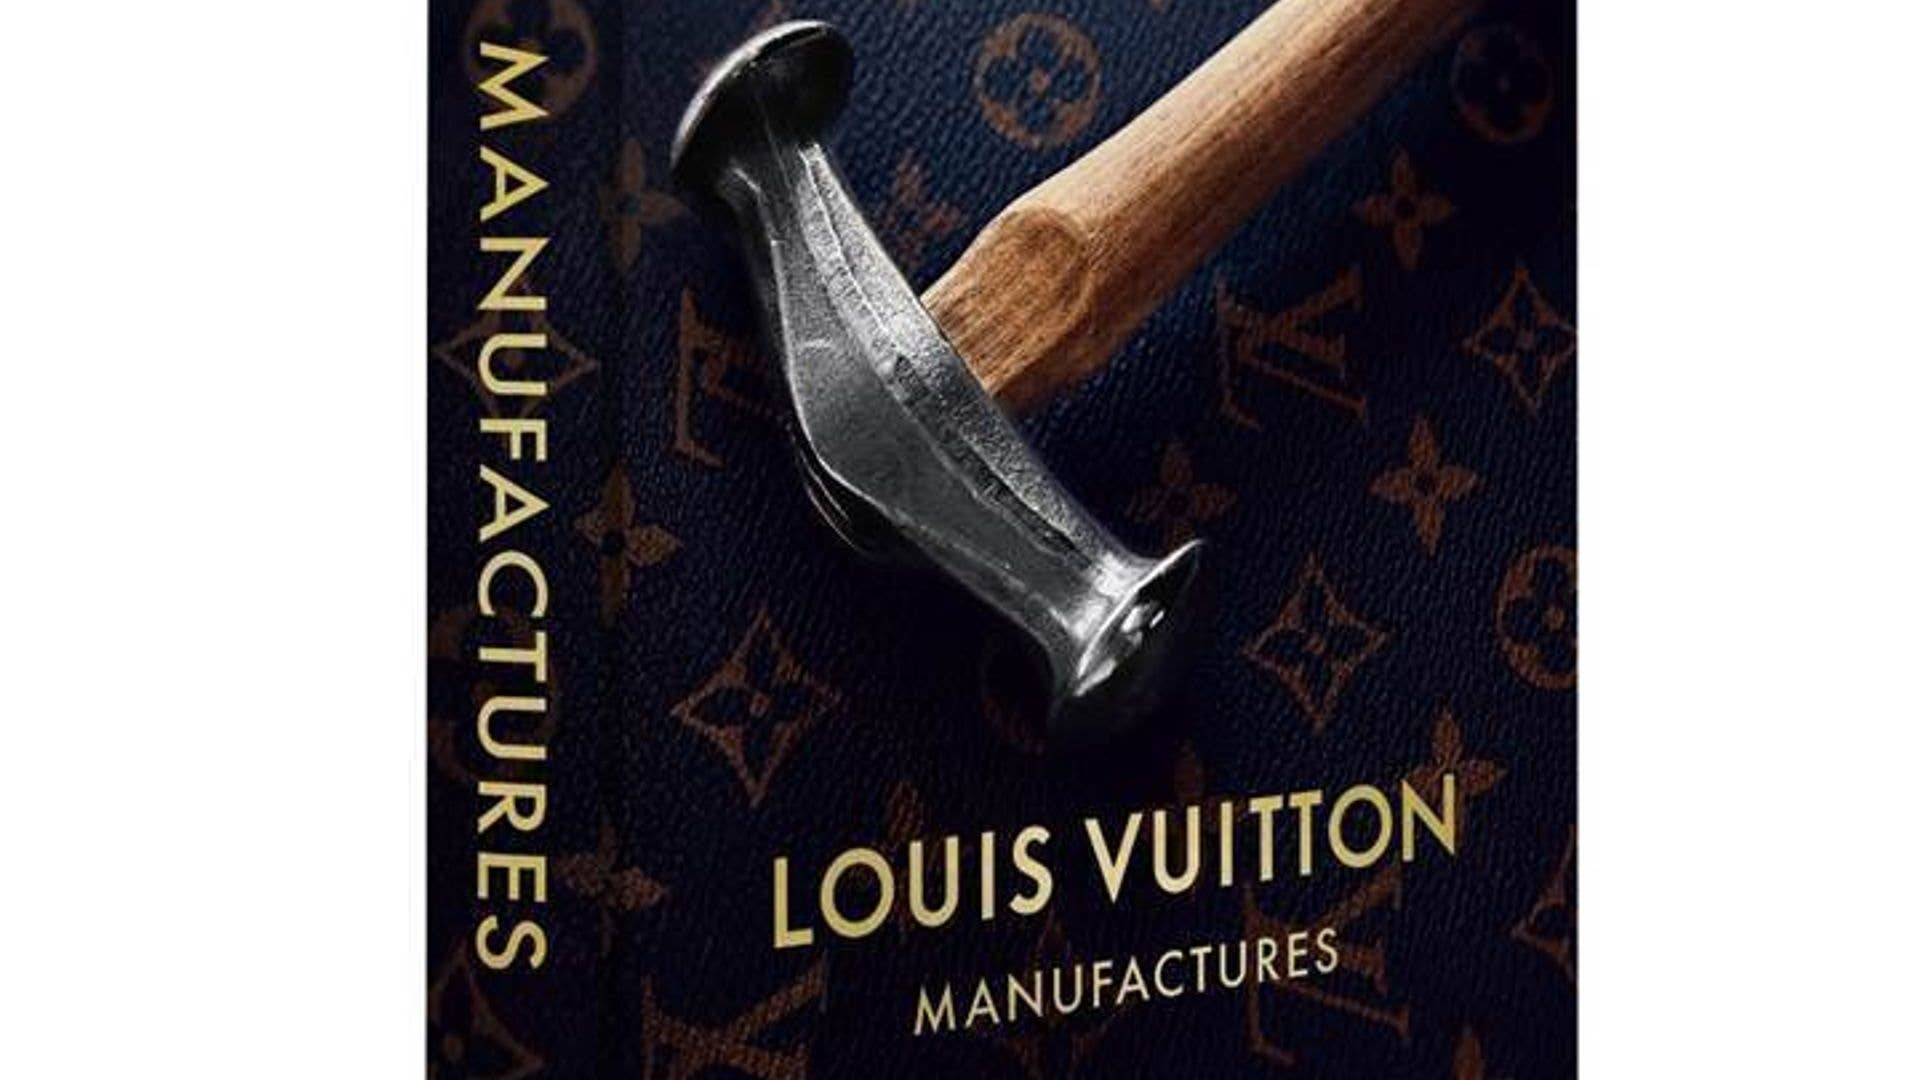 Louis Vuitton Manufactures book cover